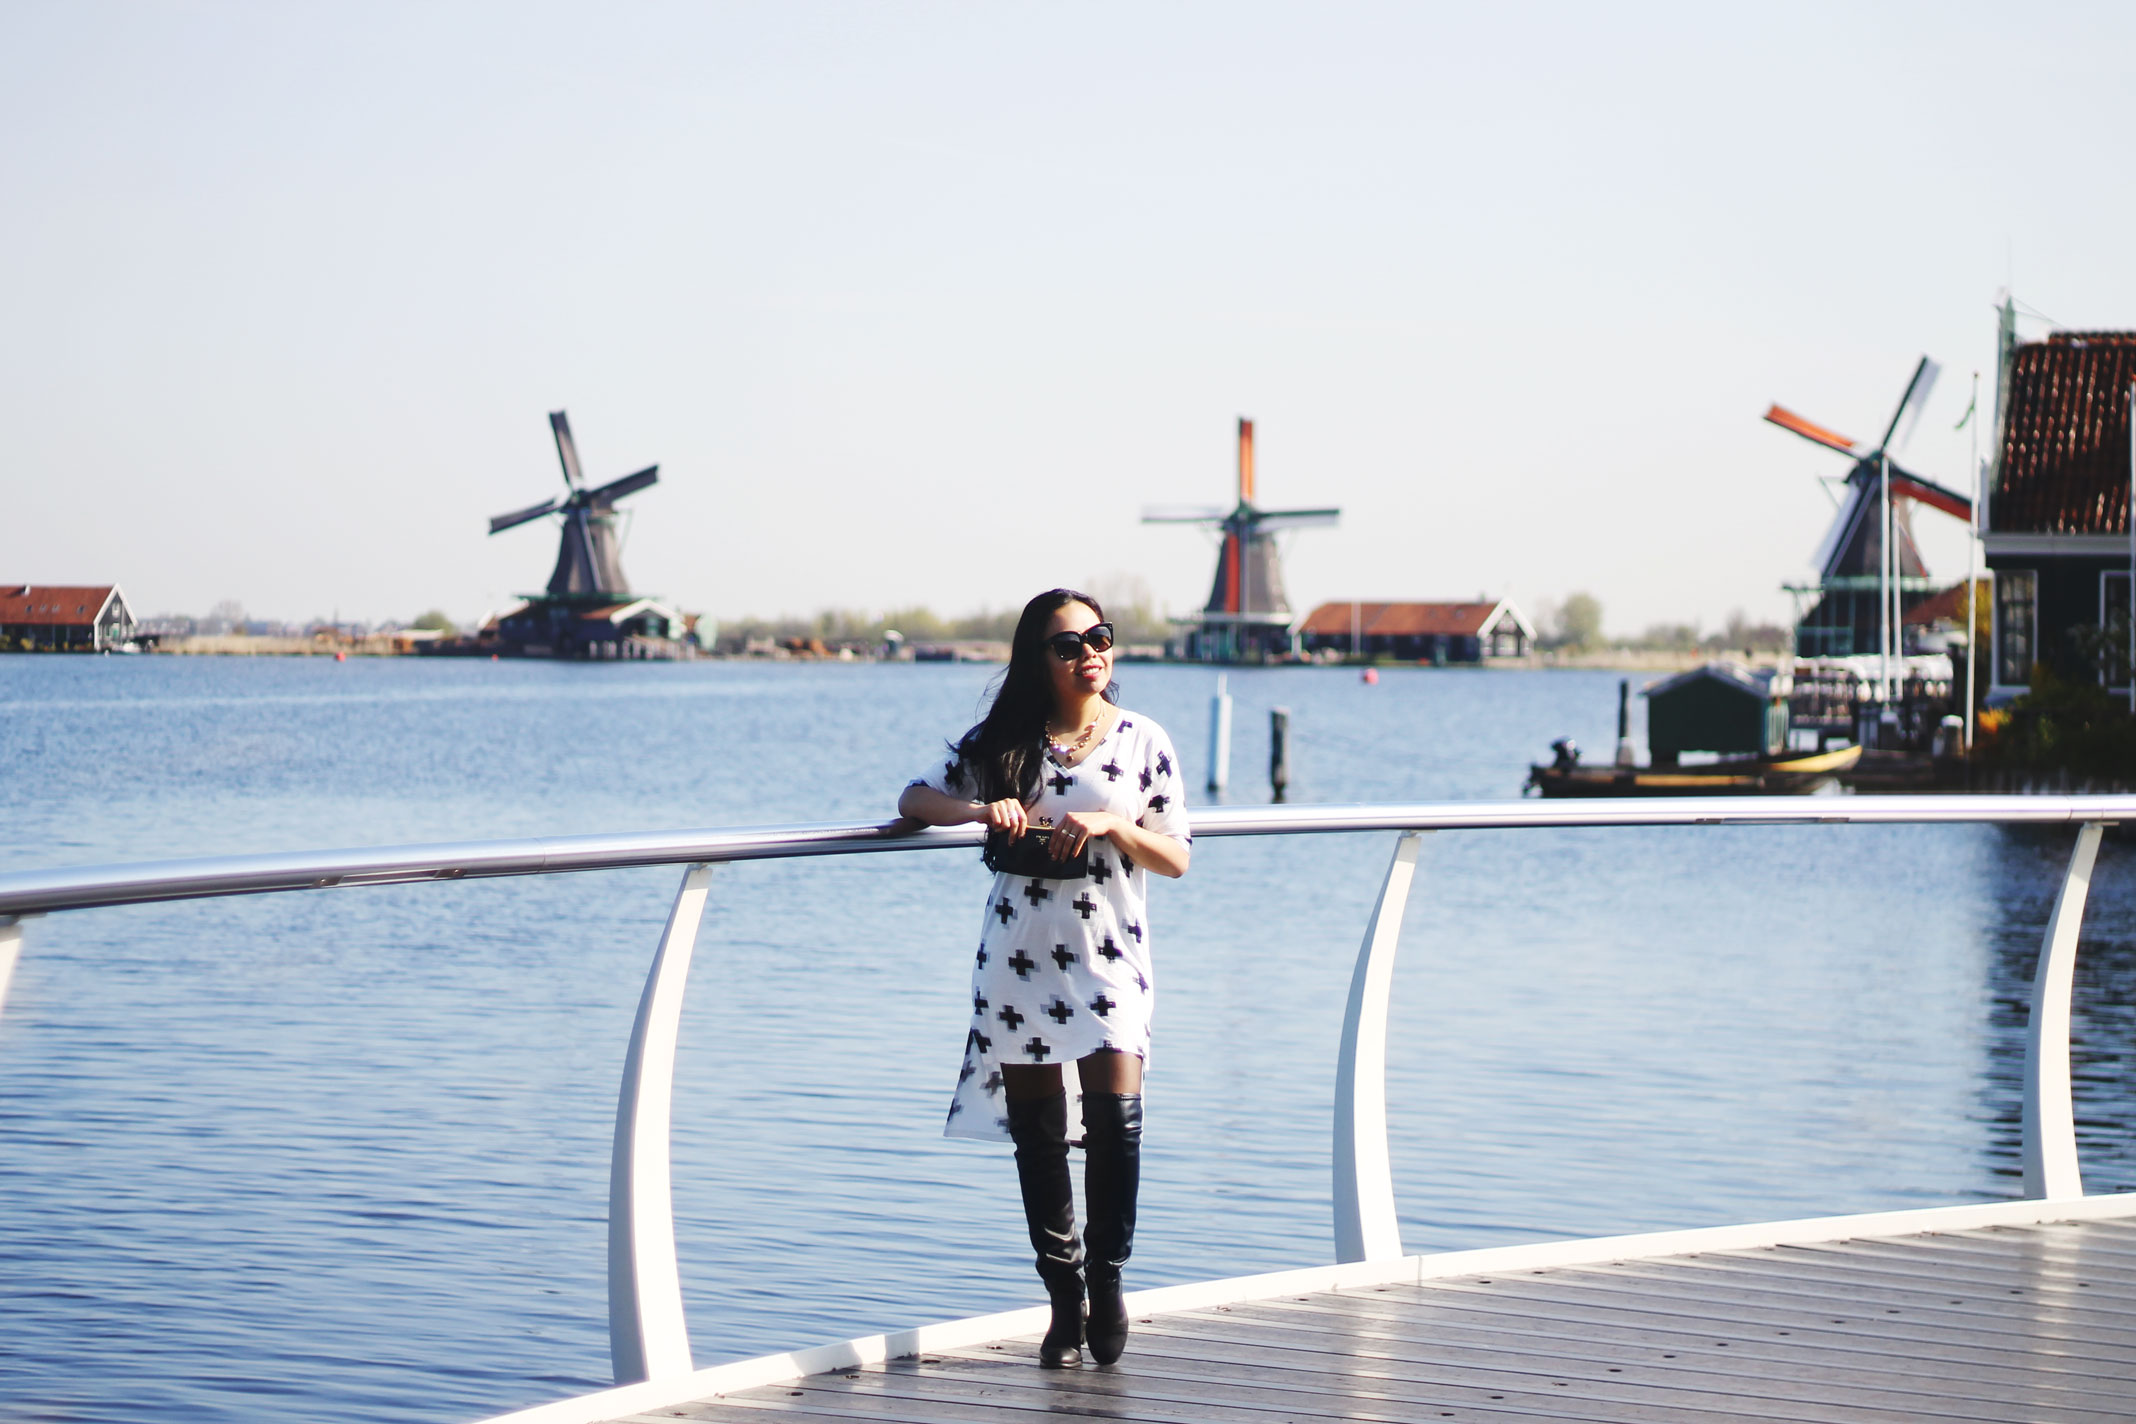 STYLEAT30 - Travel + Fashion Blog - Zaanse Schans - Amsterdam Windmills, Crafts and Museums - Tour Amsterdam - Windmill - Holland - 11